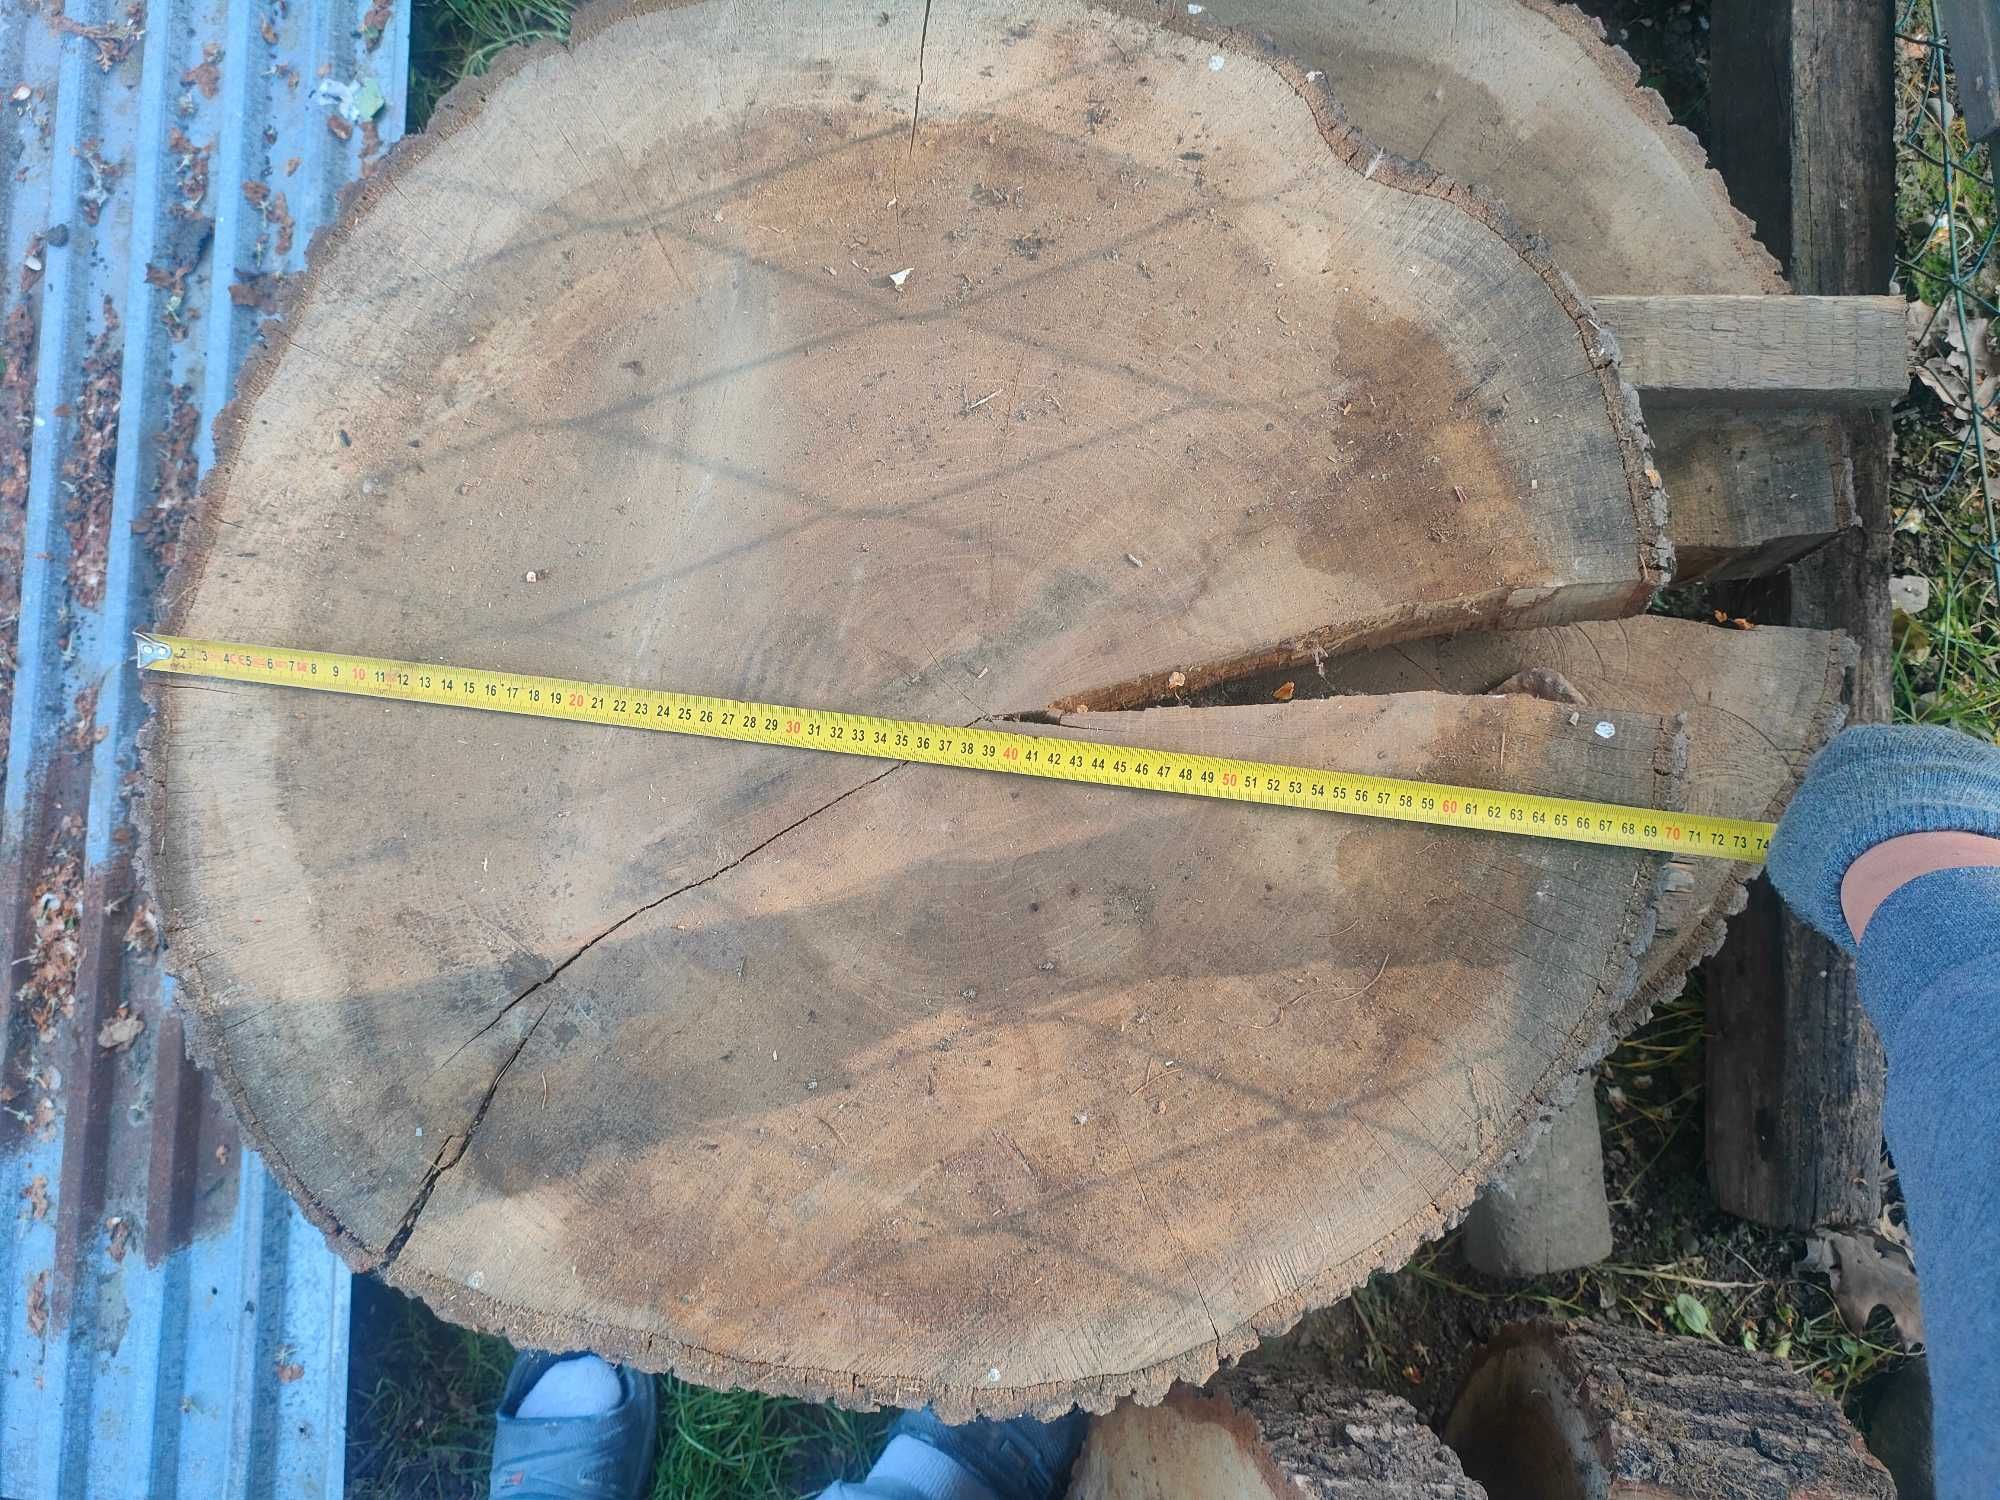 Plaster drewna dębu na stolik - średnica 60-70 cm - suche